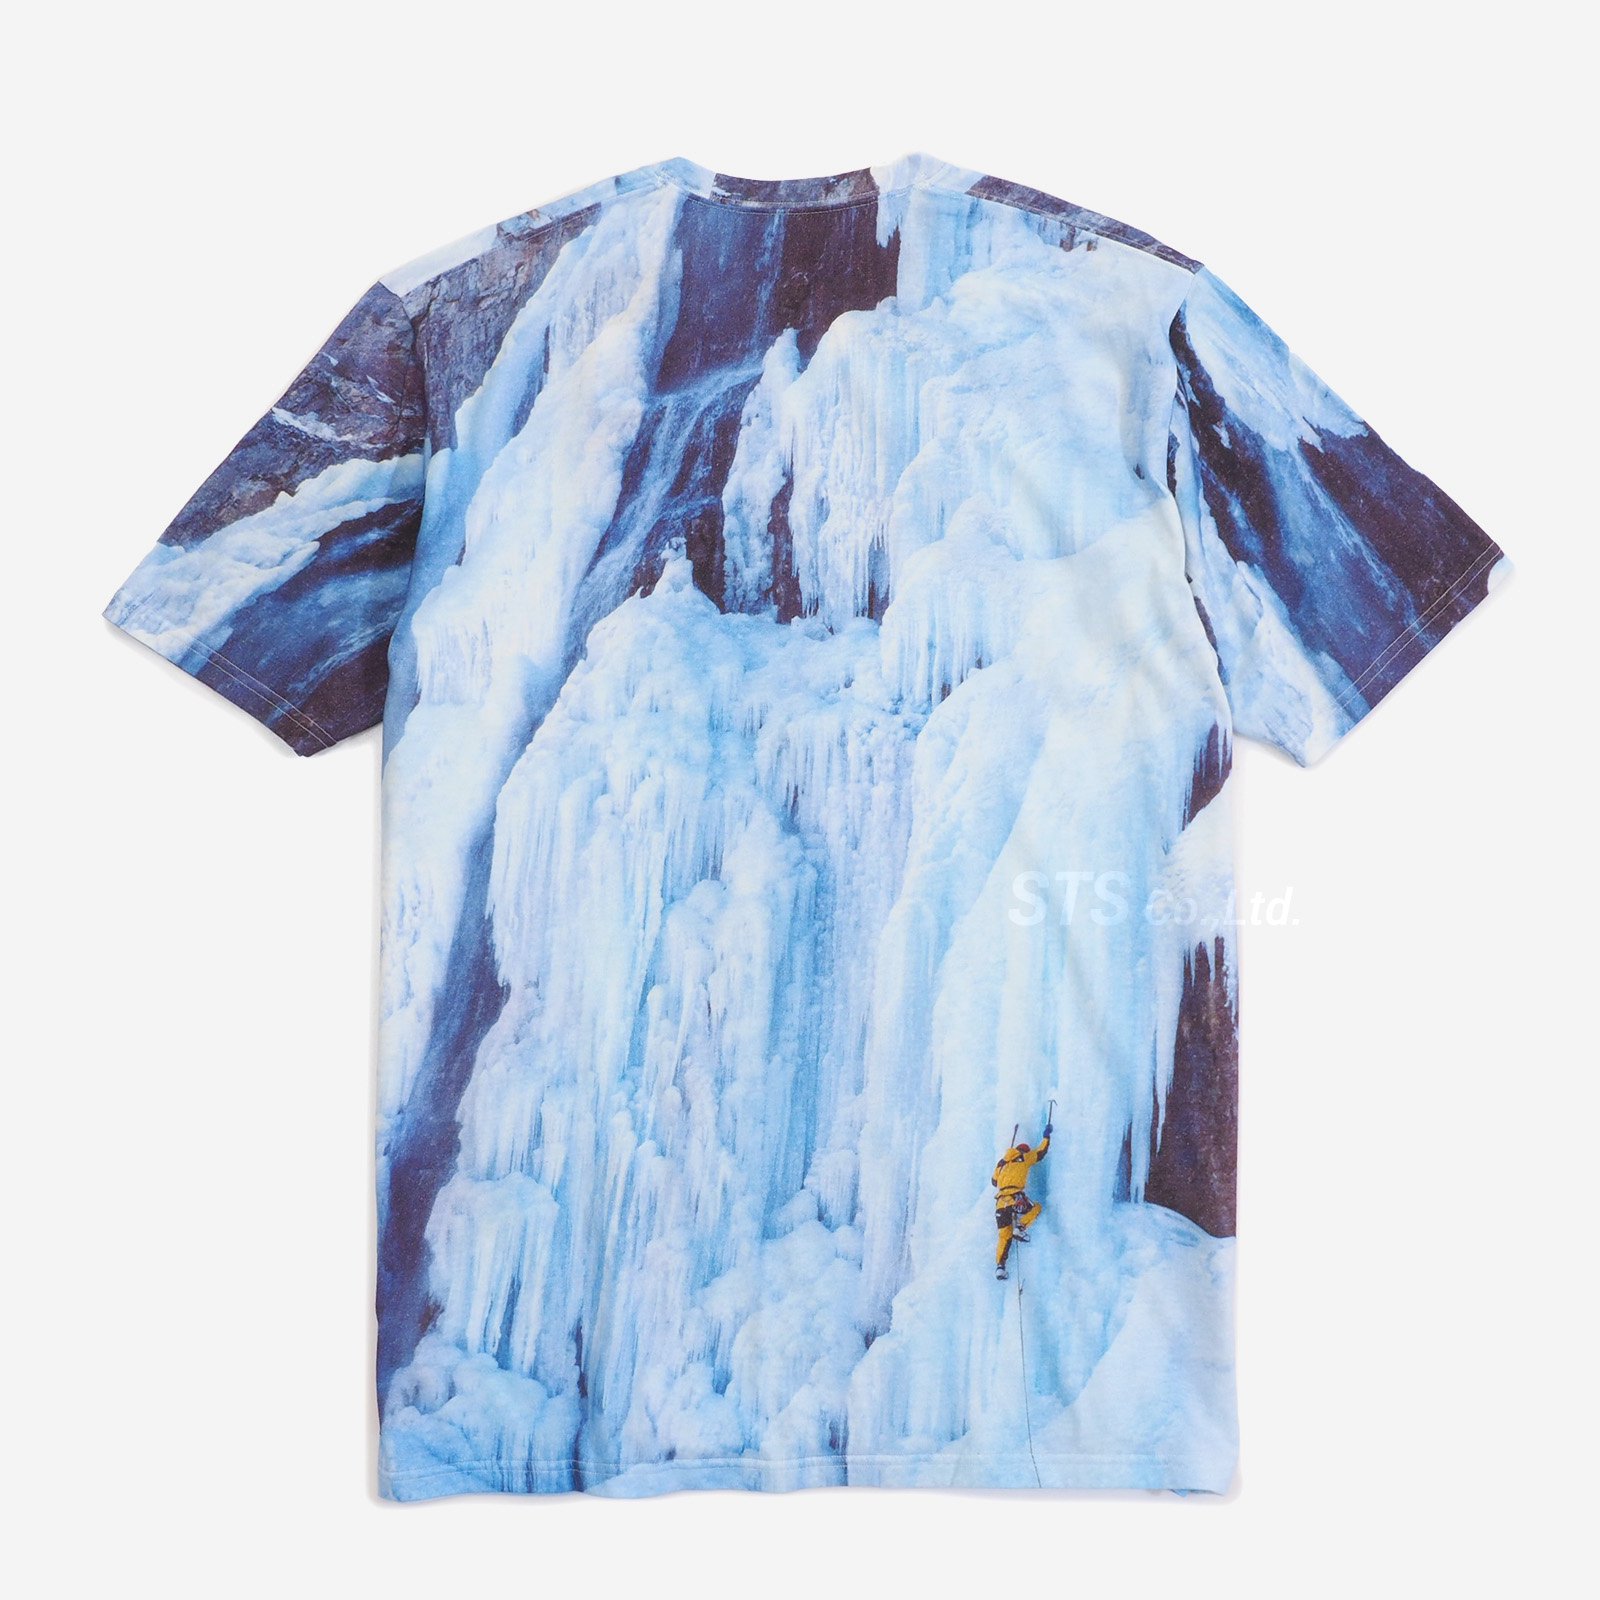 Supreme / The North Face® Ice Climb Tee